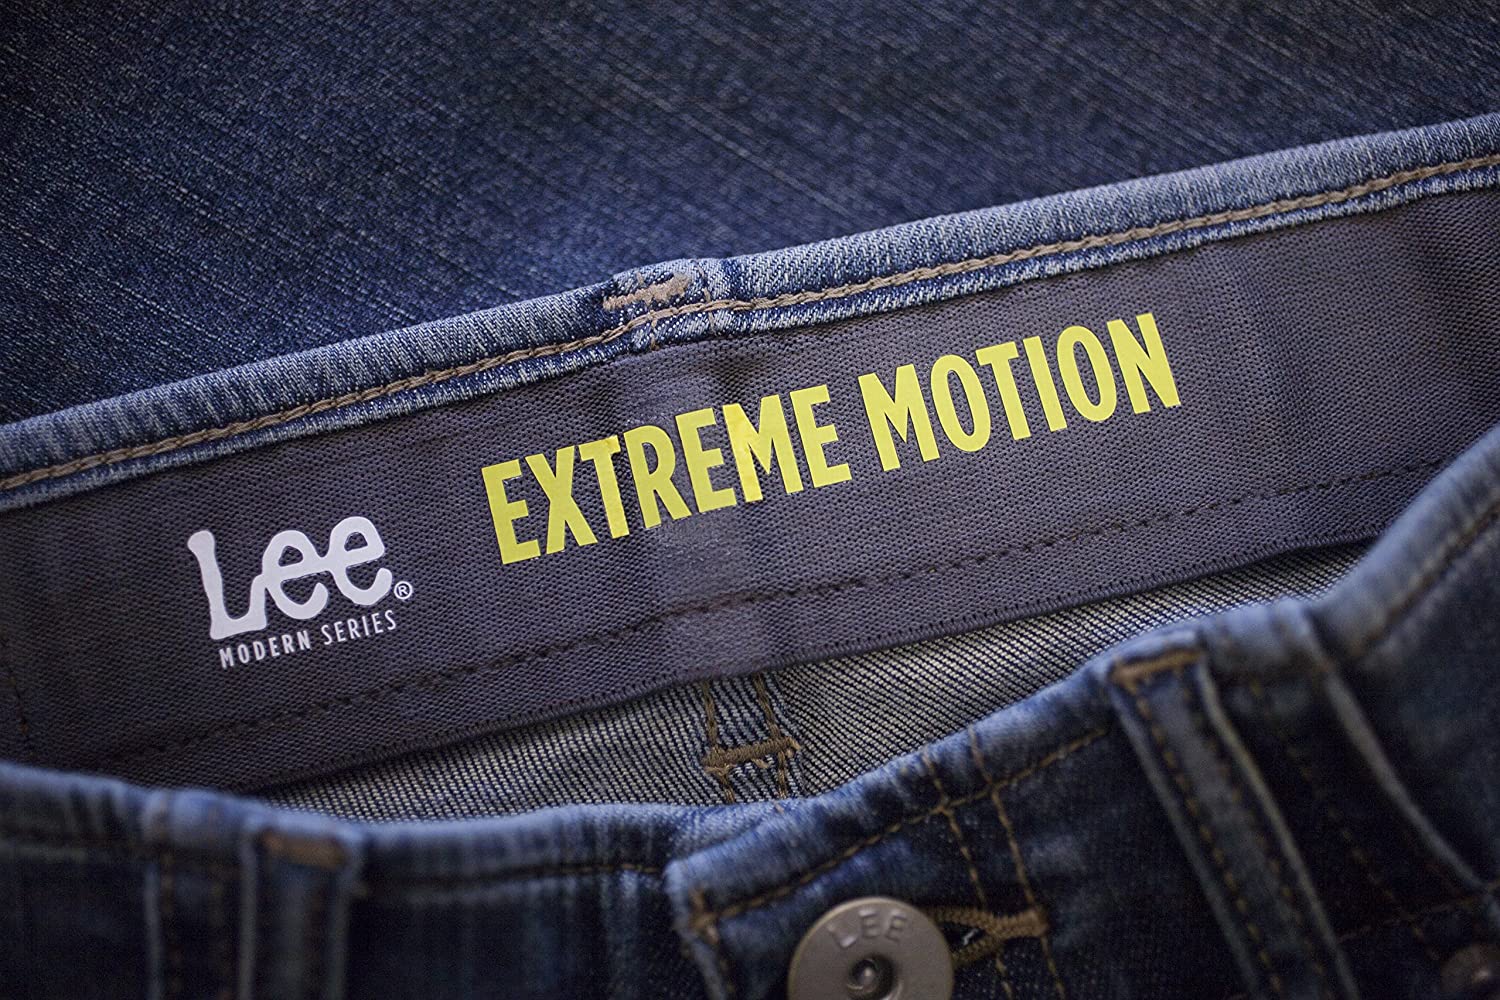 Lee Uniforms Men's Performance Series Extreme Motion, Fernando, Size ...